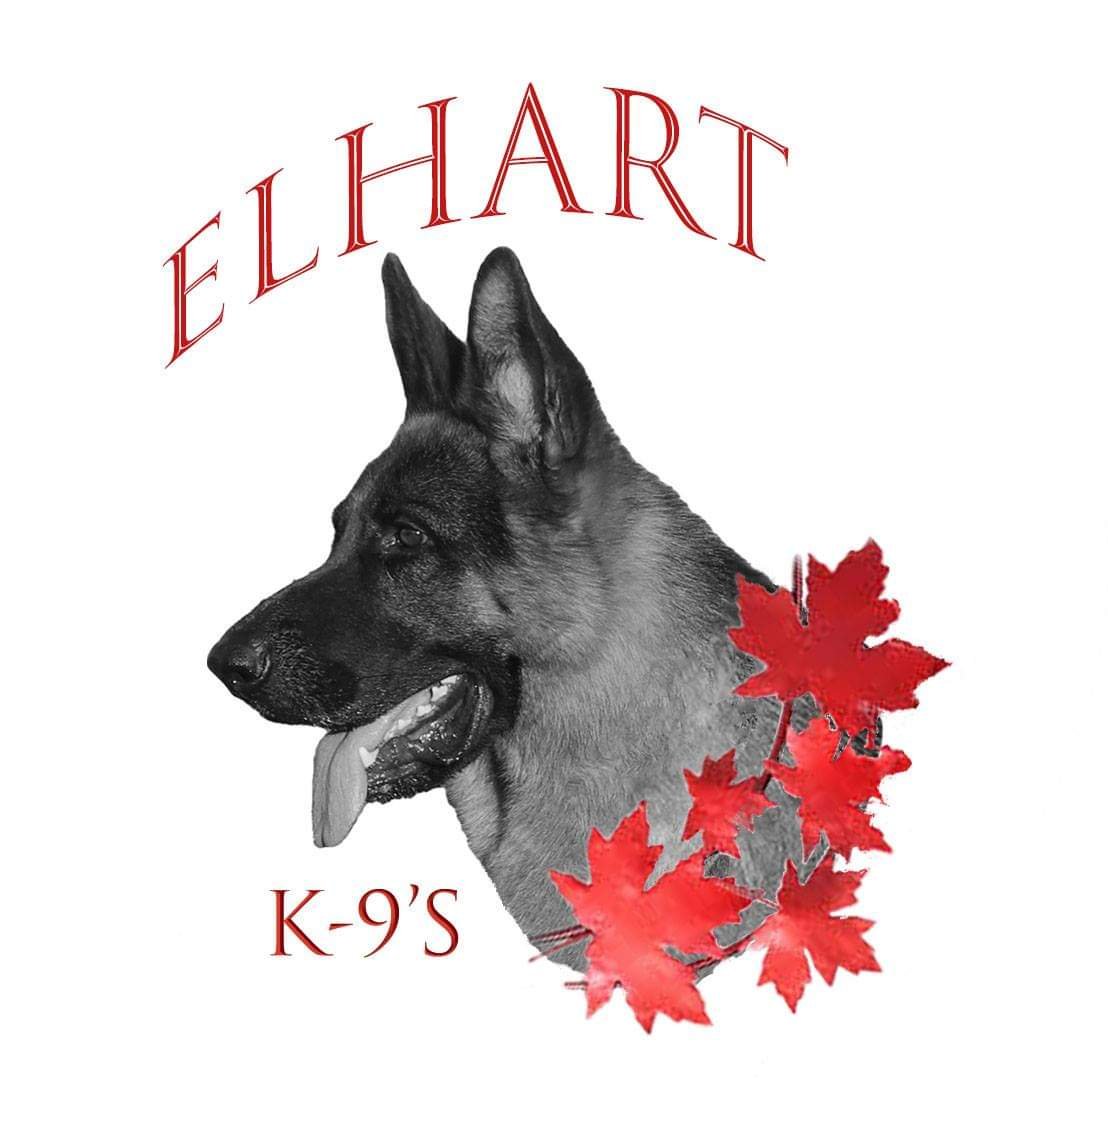 Elhart K-9's